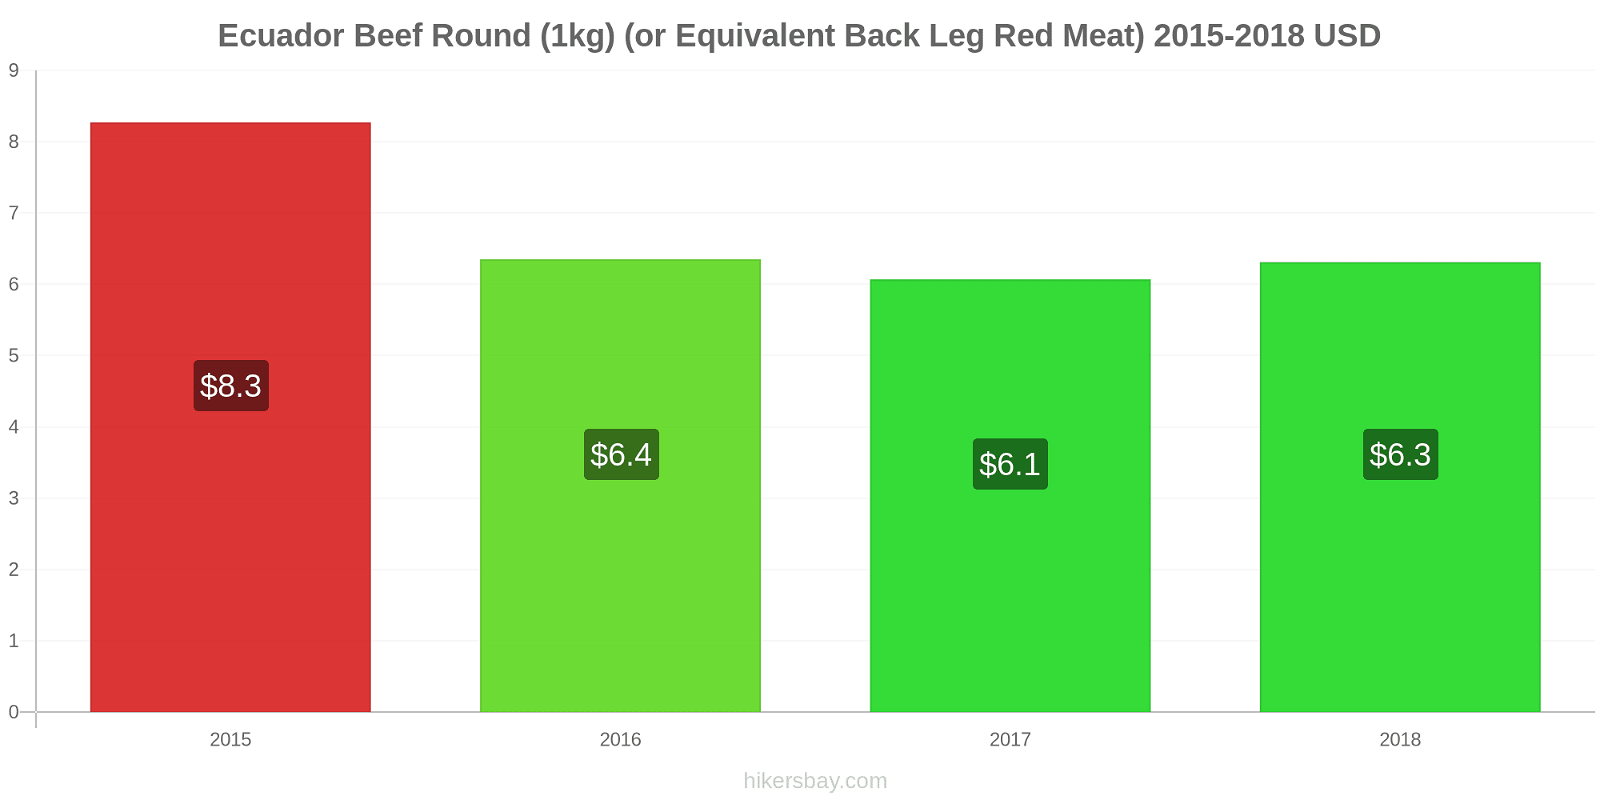 Ecuador price changes Beef (1kg) (or similar red meat) hikersbay.com